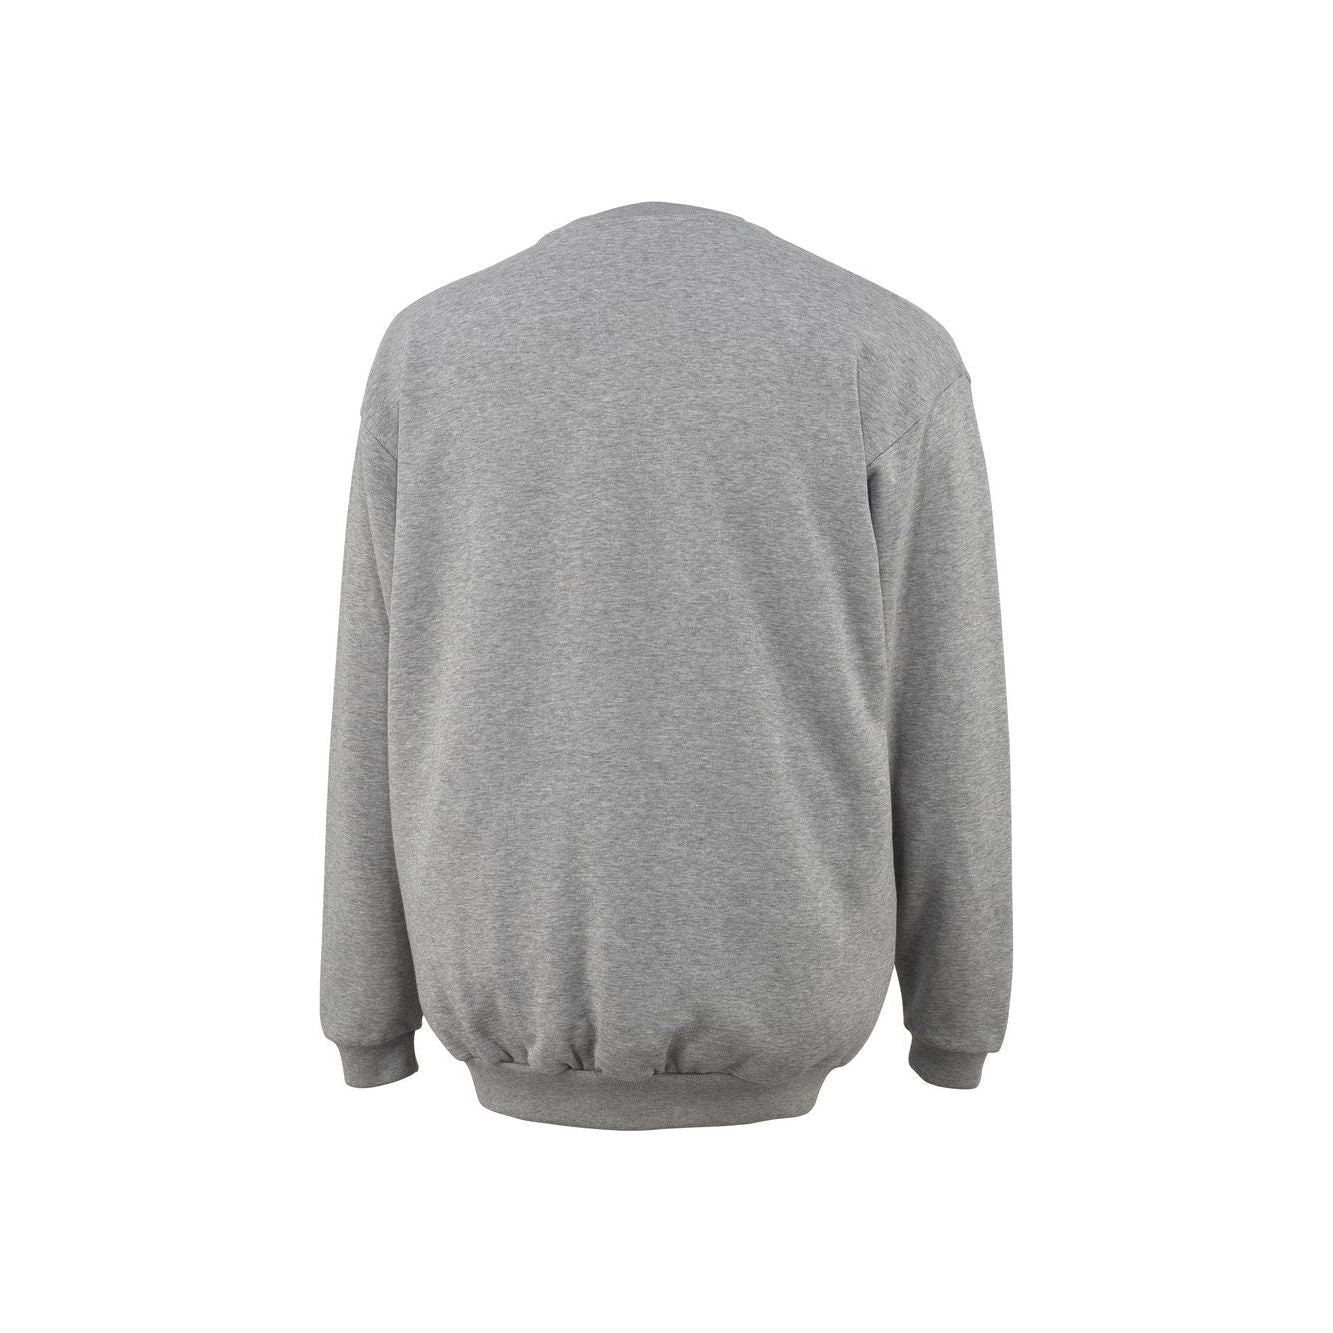 Mascot Caribien Sweatshirt Warm-Soft Grey 00784-280-08 Back